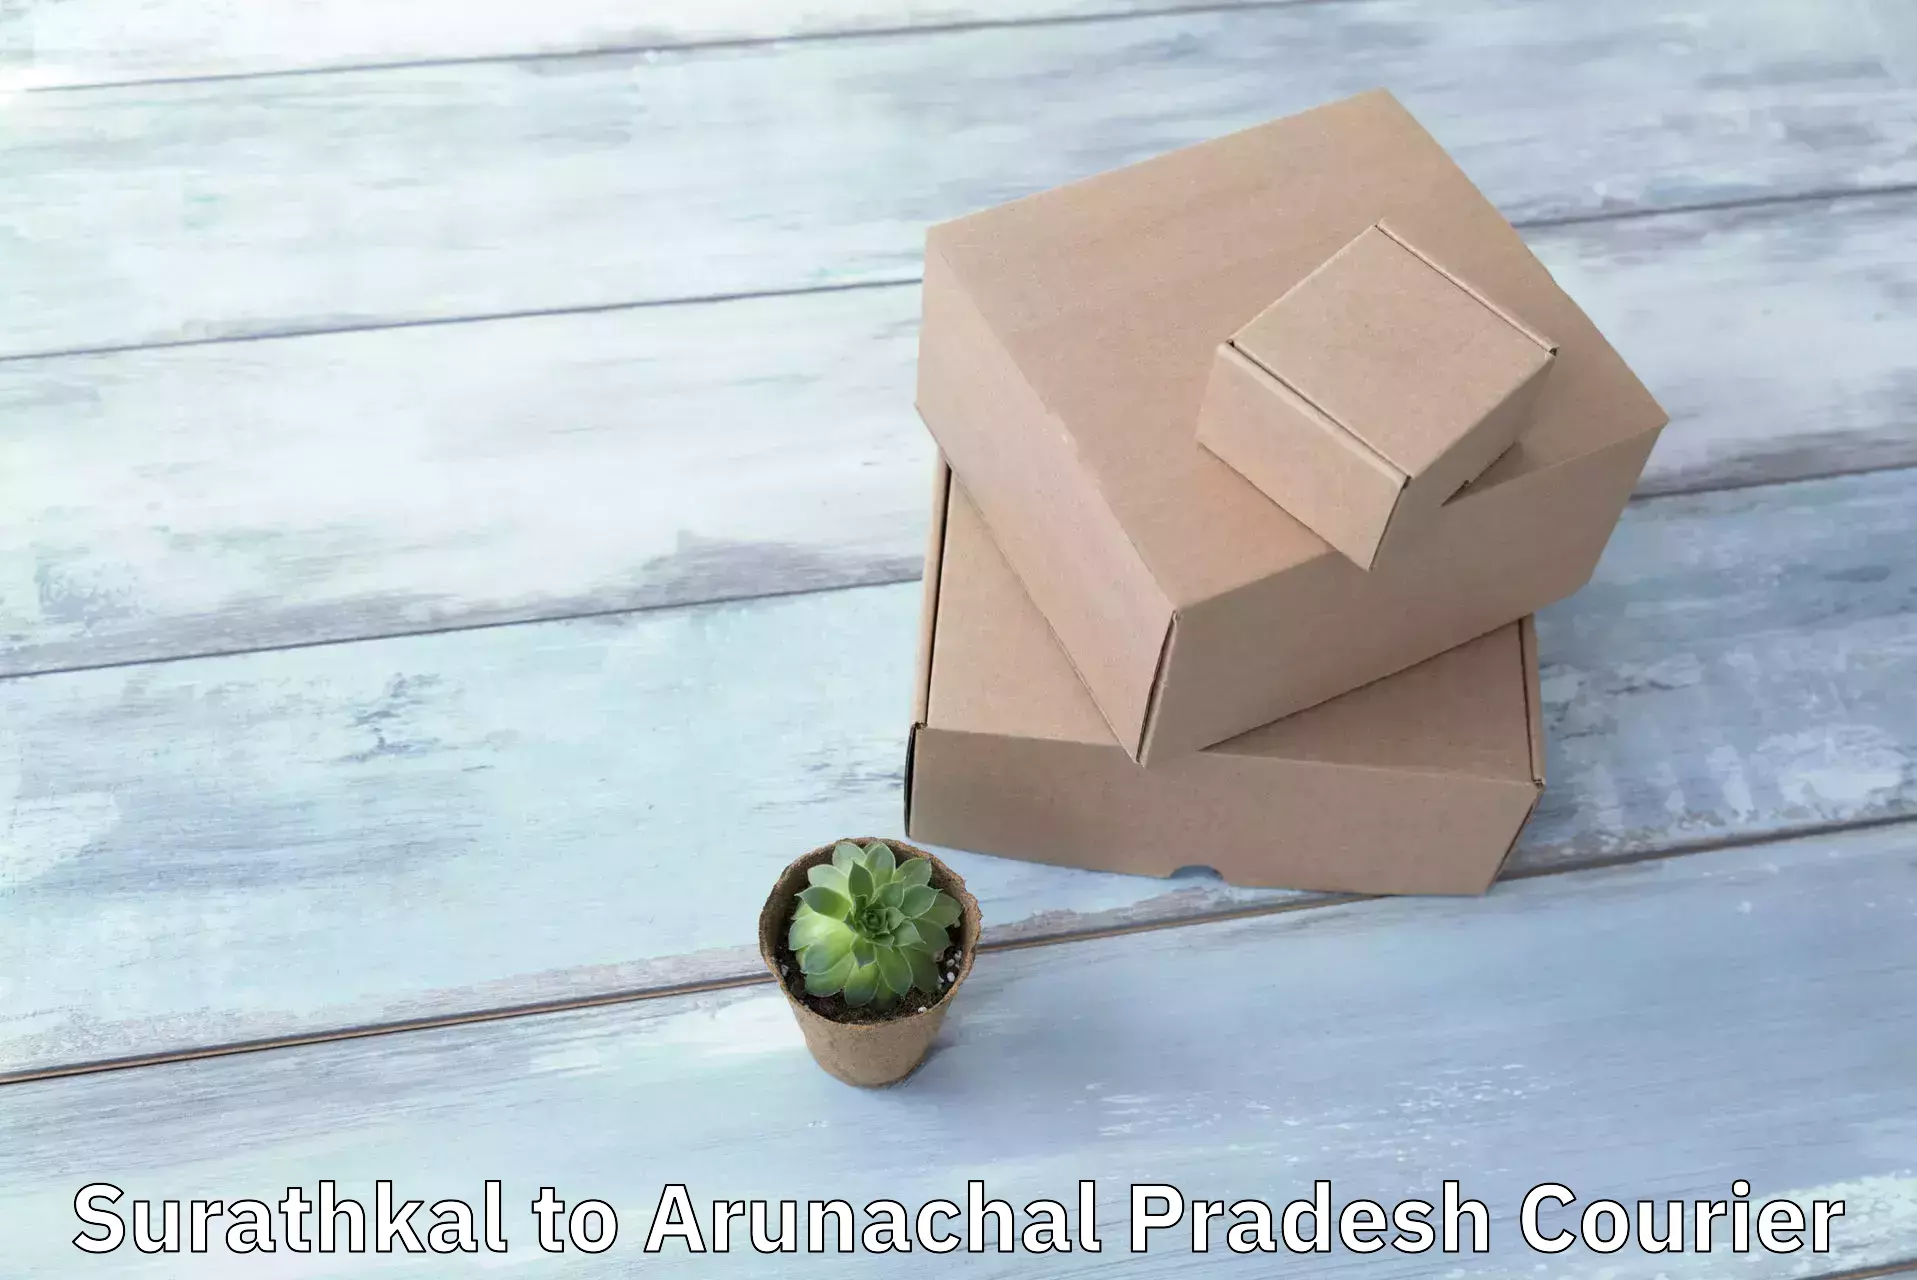 Affordable parcel service Surathkal to Arunachal Pradesh